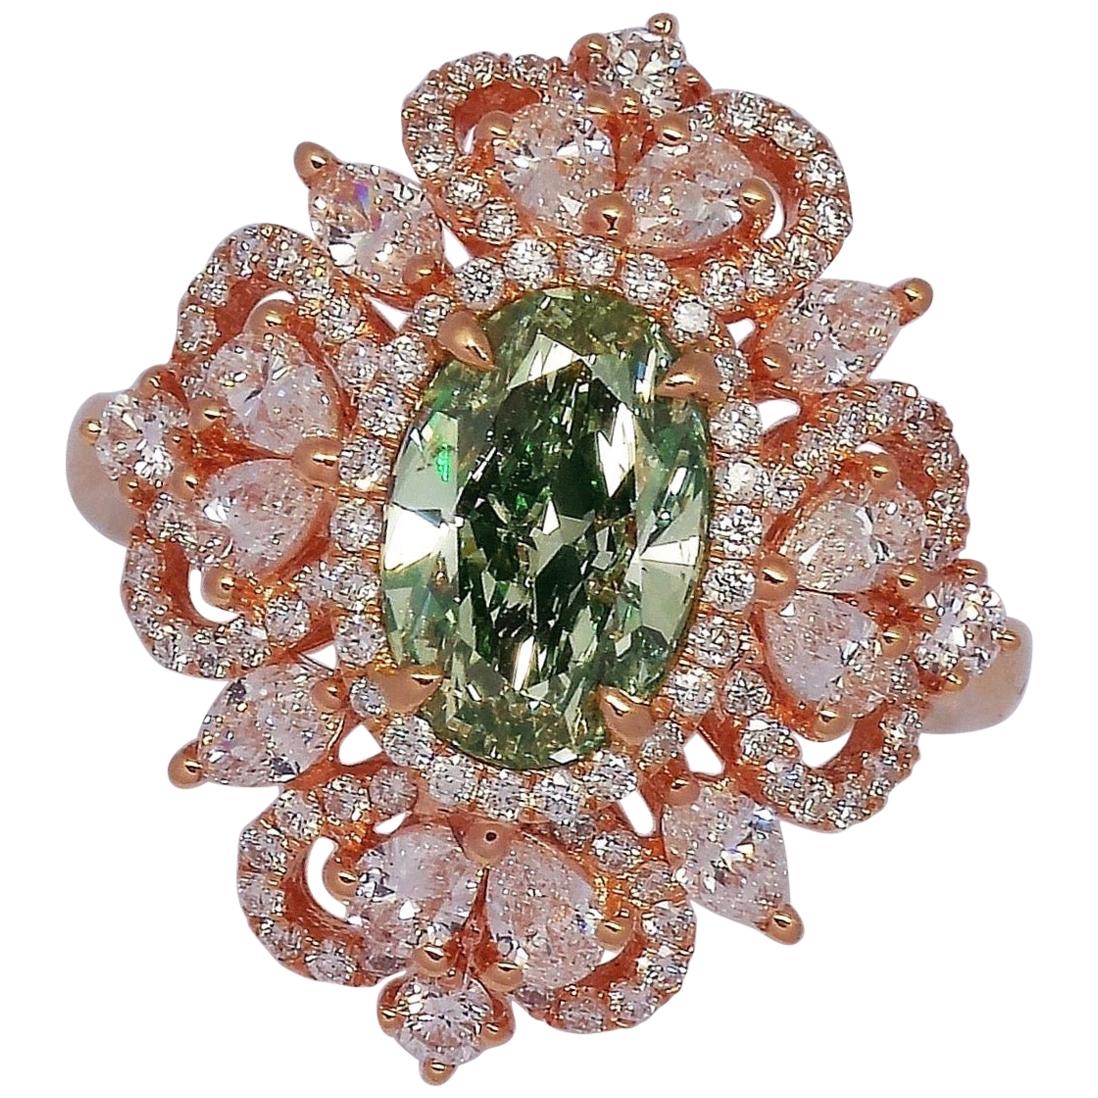 Emilio Jewelry, vert jauneâtre fantaisie certifié GIA de 1,75 carat